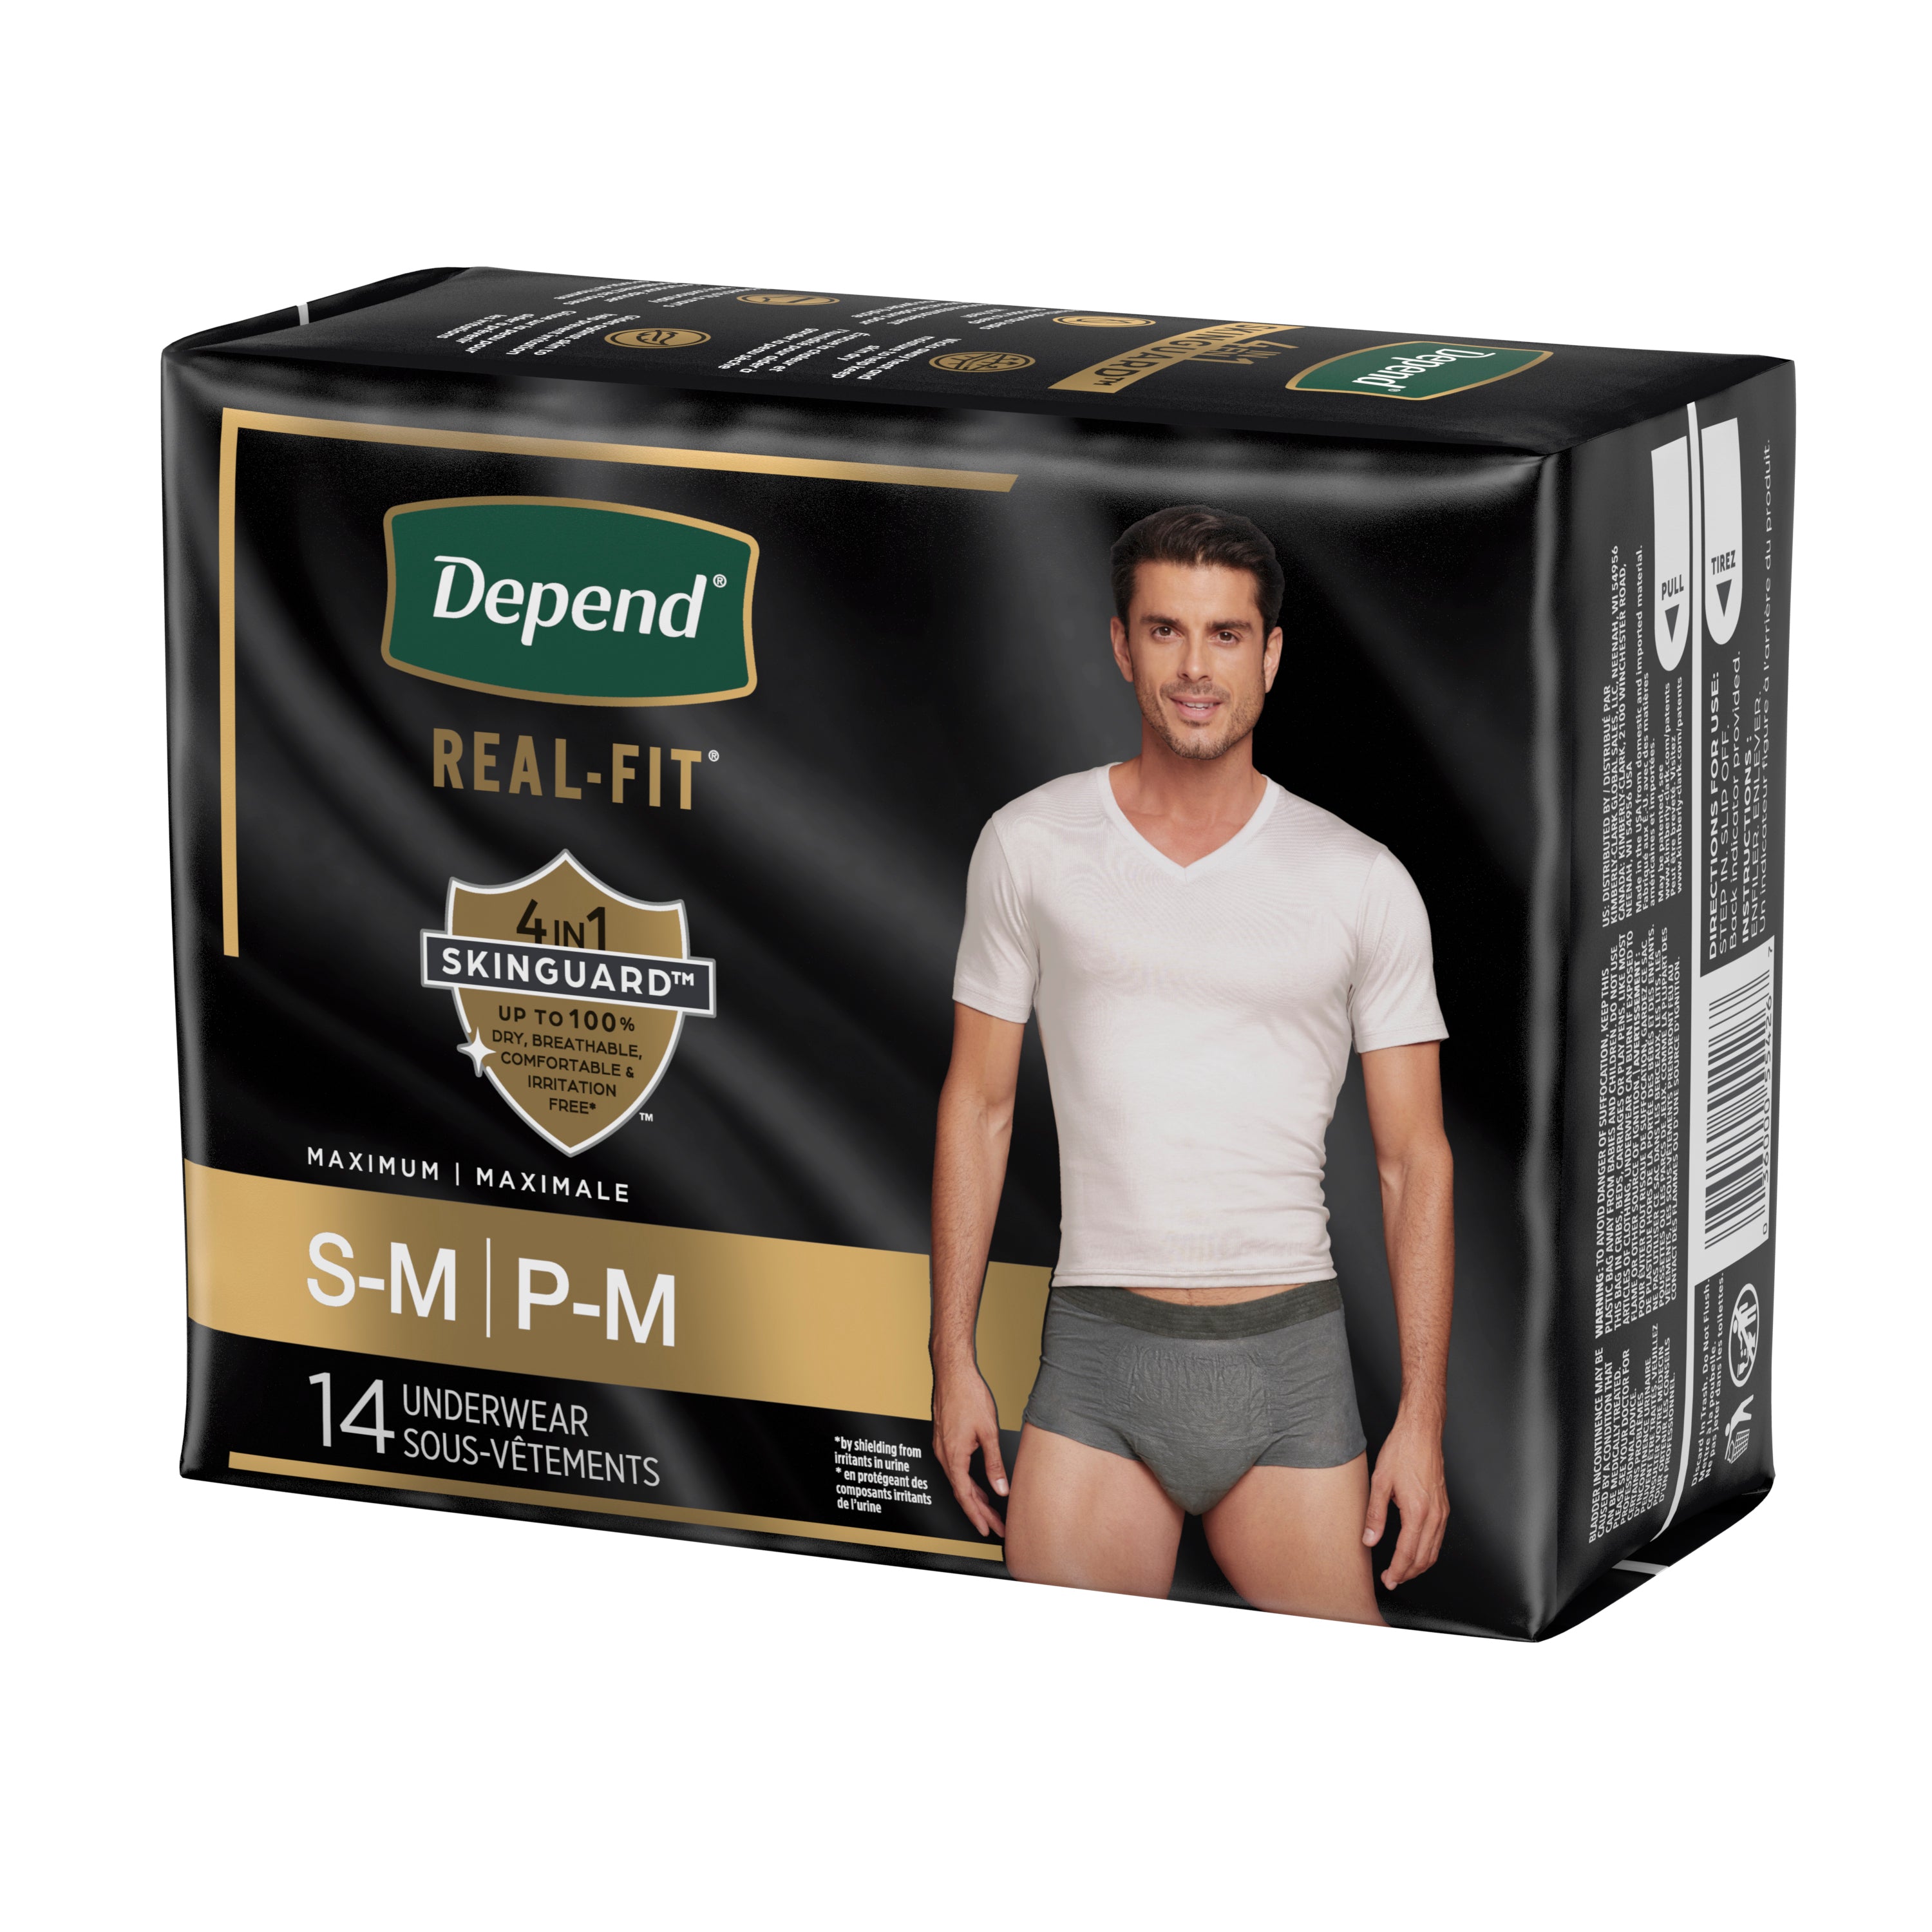 Depend Super Premium Real-Fit Underwear for Men